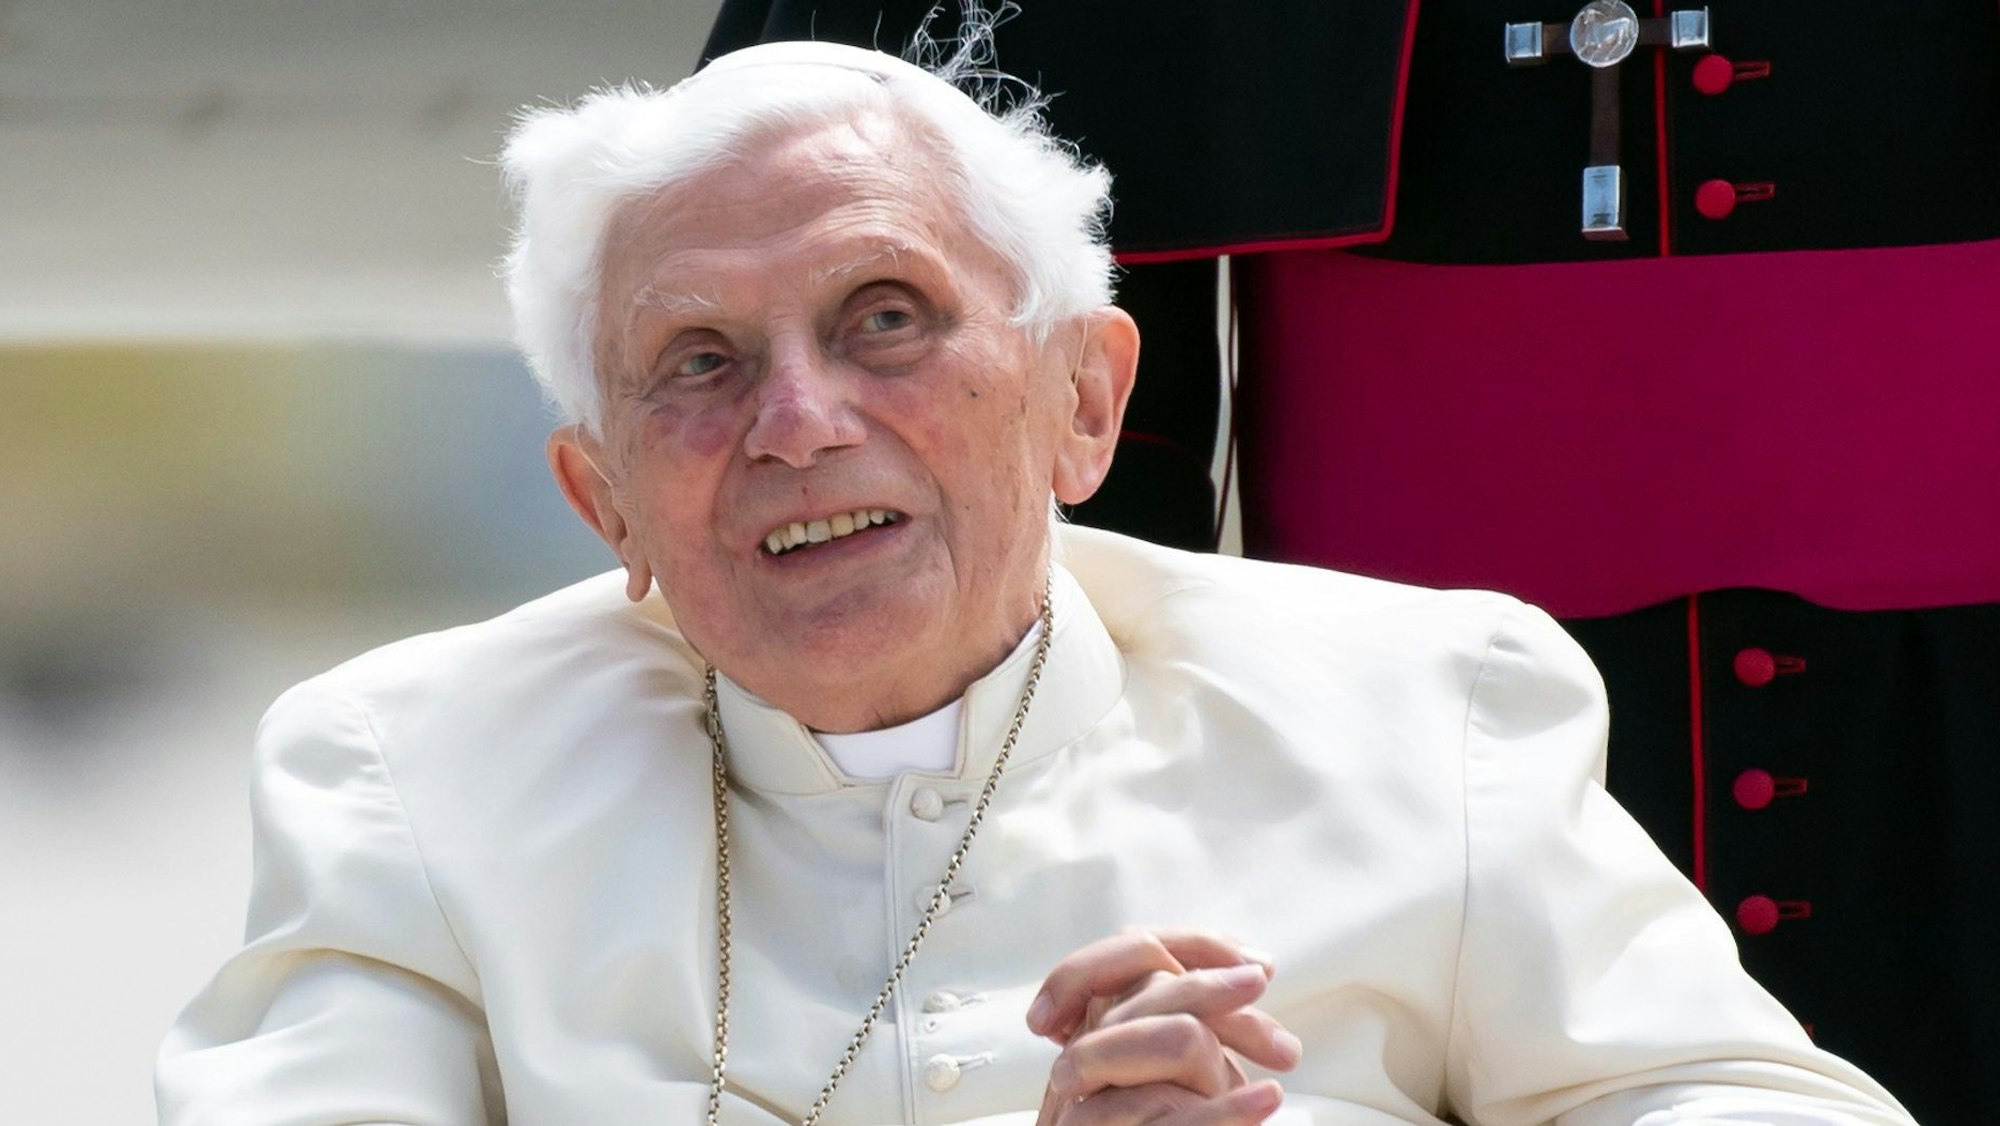 Der emeritierte Papst Benedikt XVI. kommt zu seinem Rückflug in den Vatikan am Flughafen an. (Archivbild)